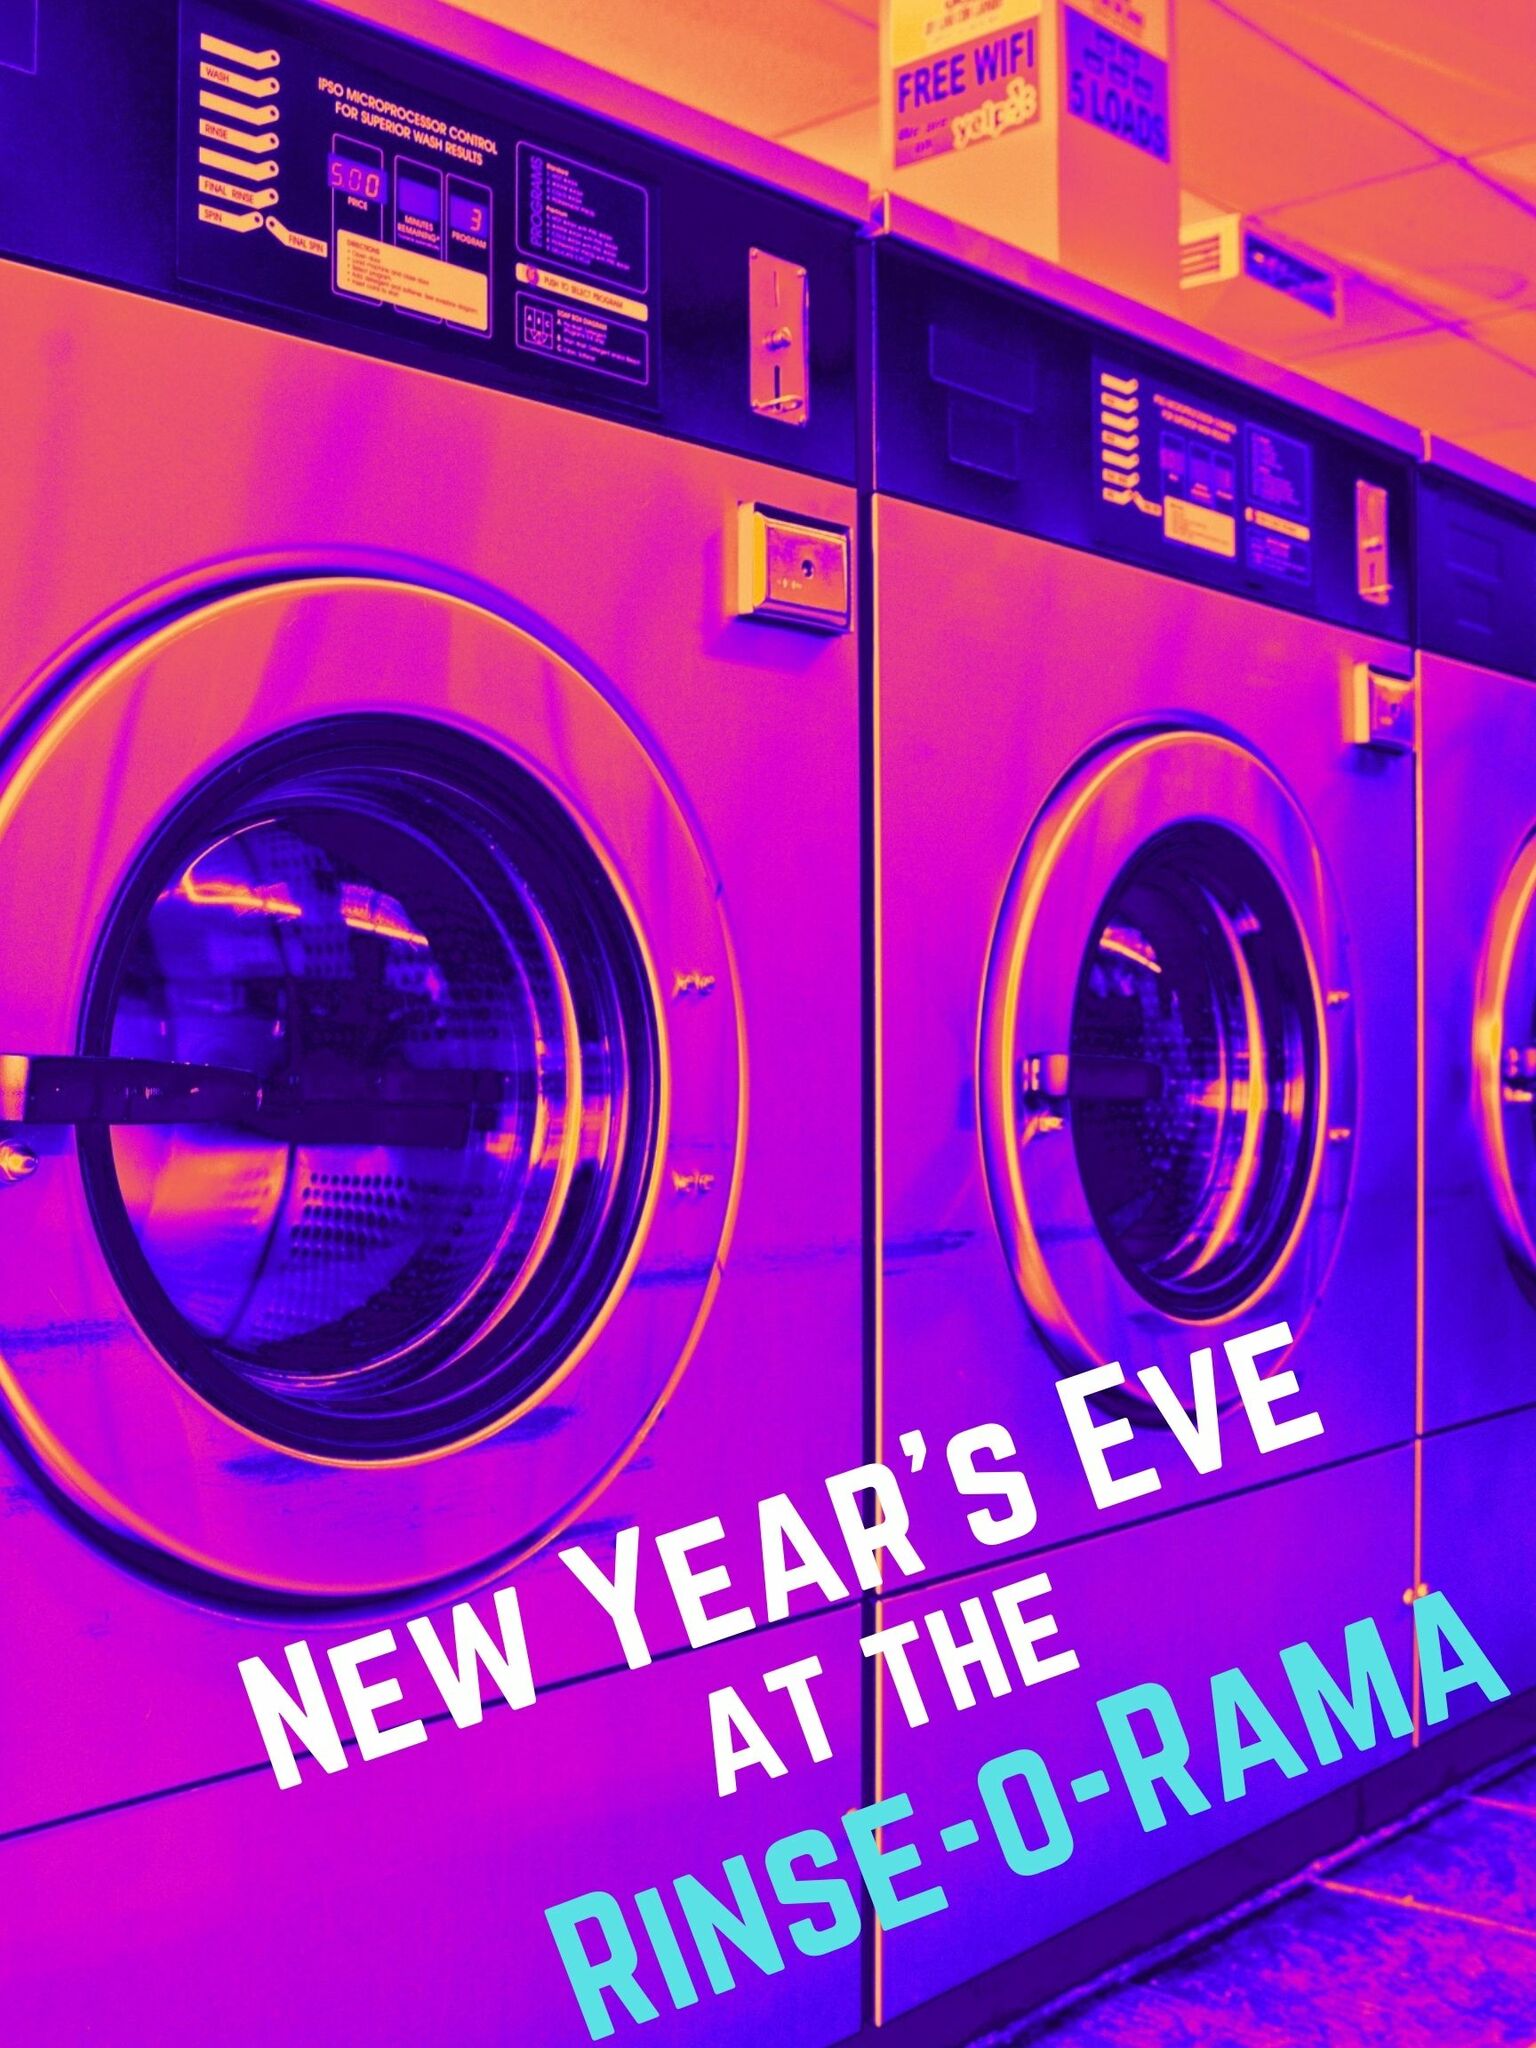 NEW YEAR'S EVE AT THE RINSE-O-RAMA